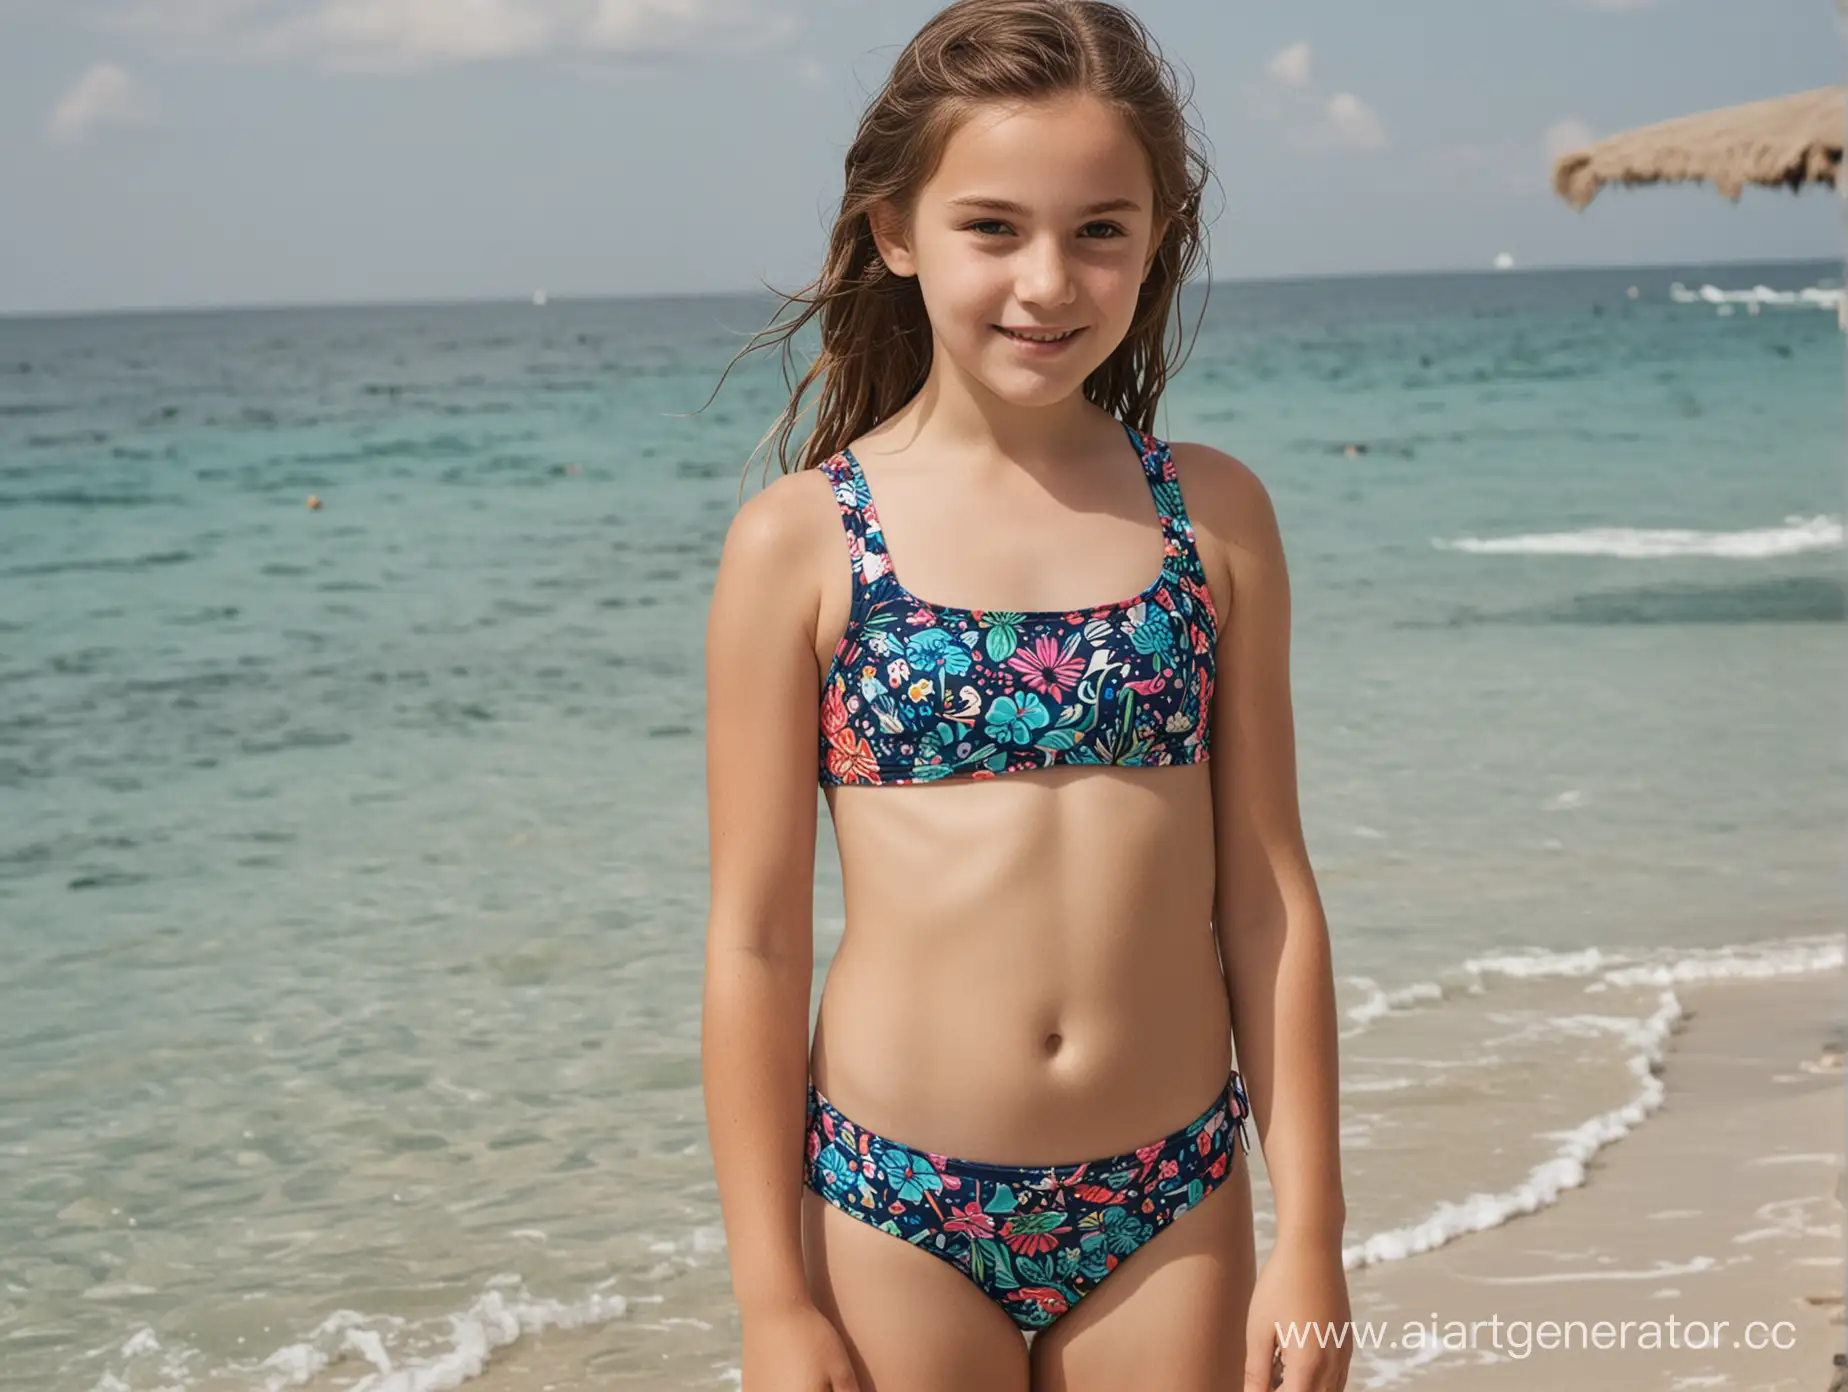 Adolescent-Girl-in-TwoPiece-Swimsuit-Enjoying-Beach-Day